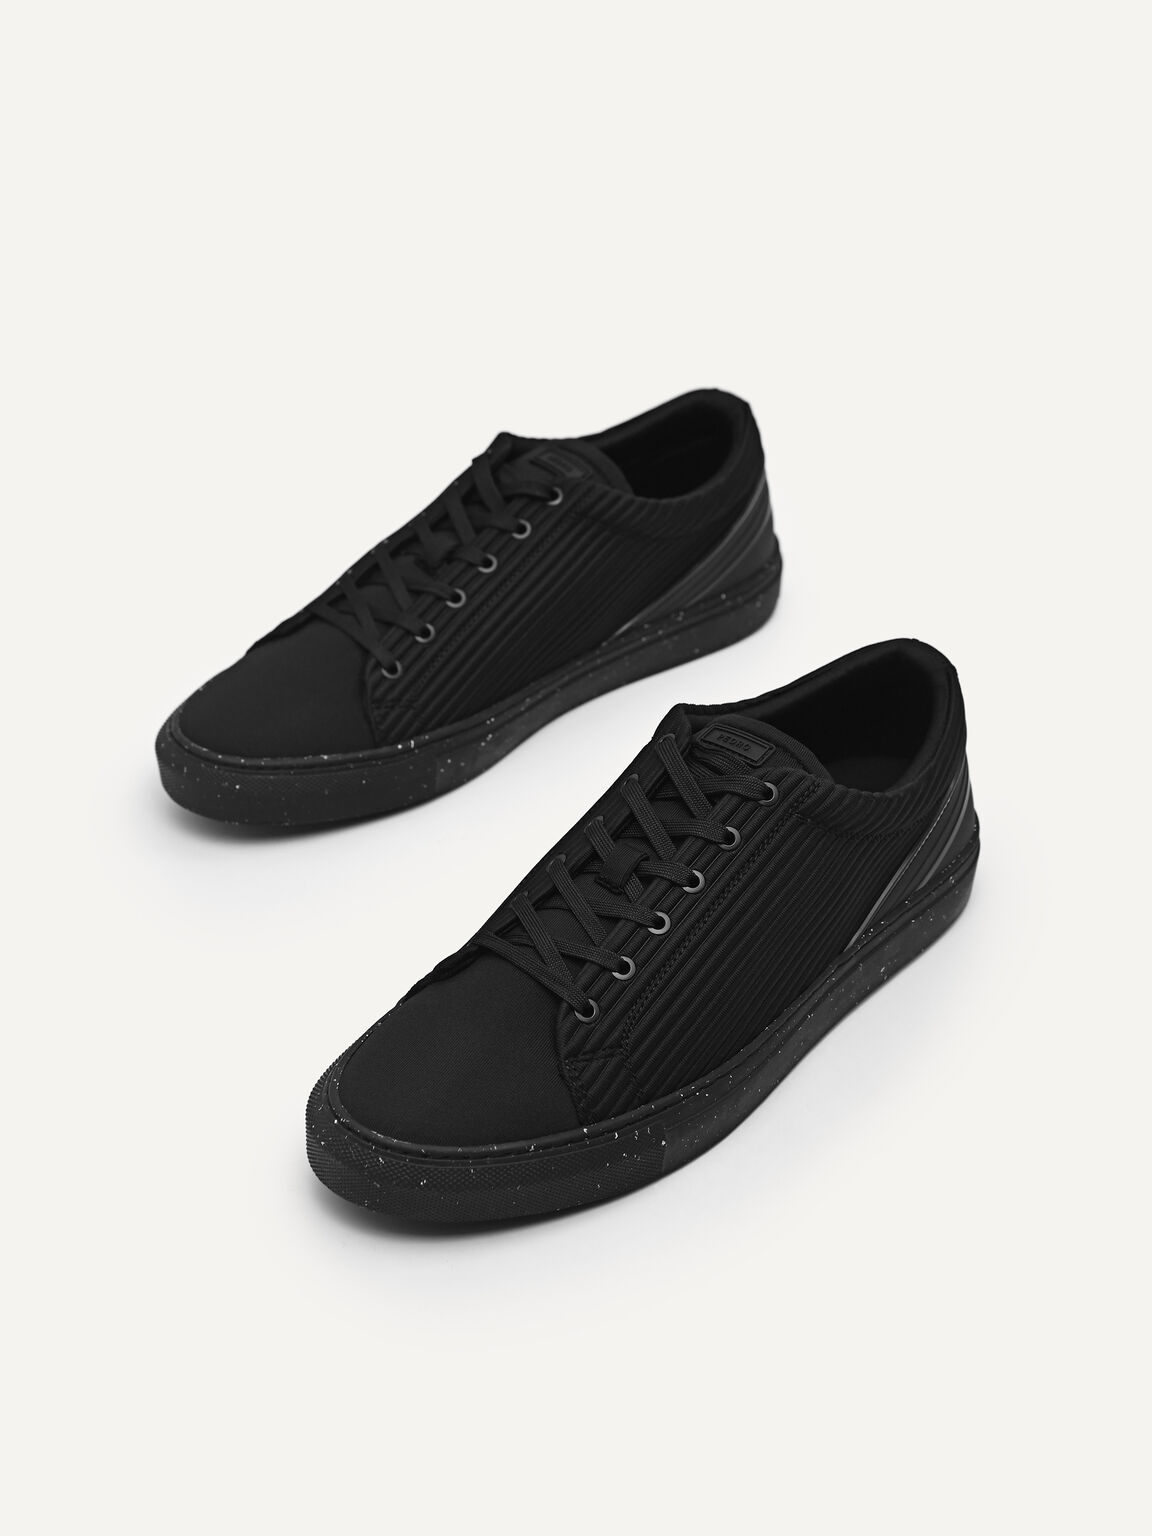 rePEDRO Pleated Sneakers, Black